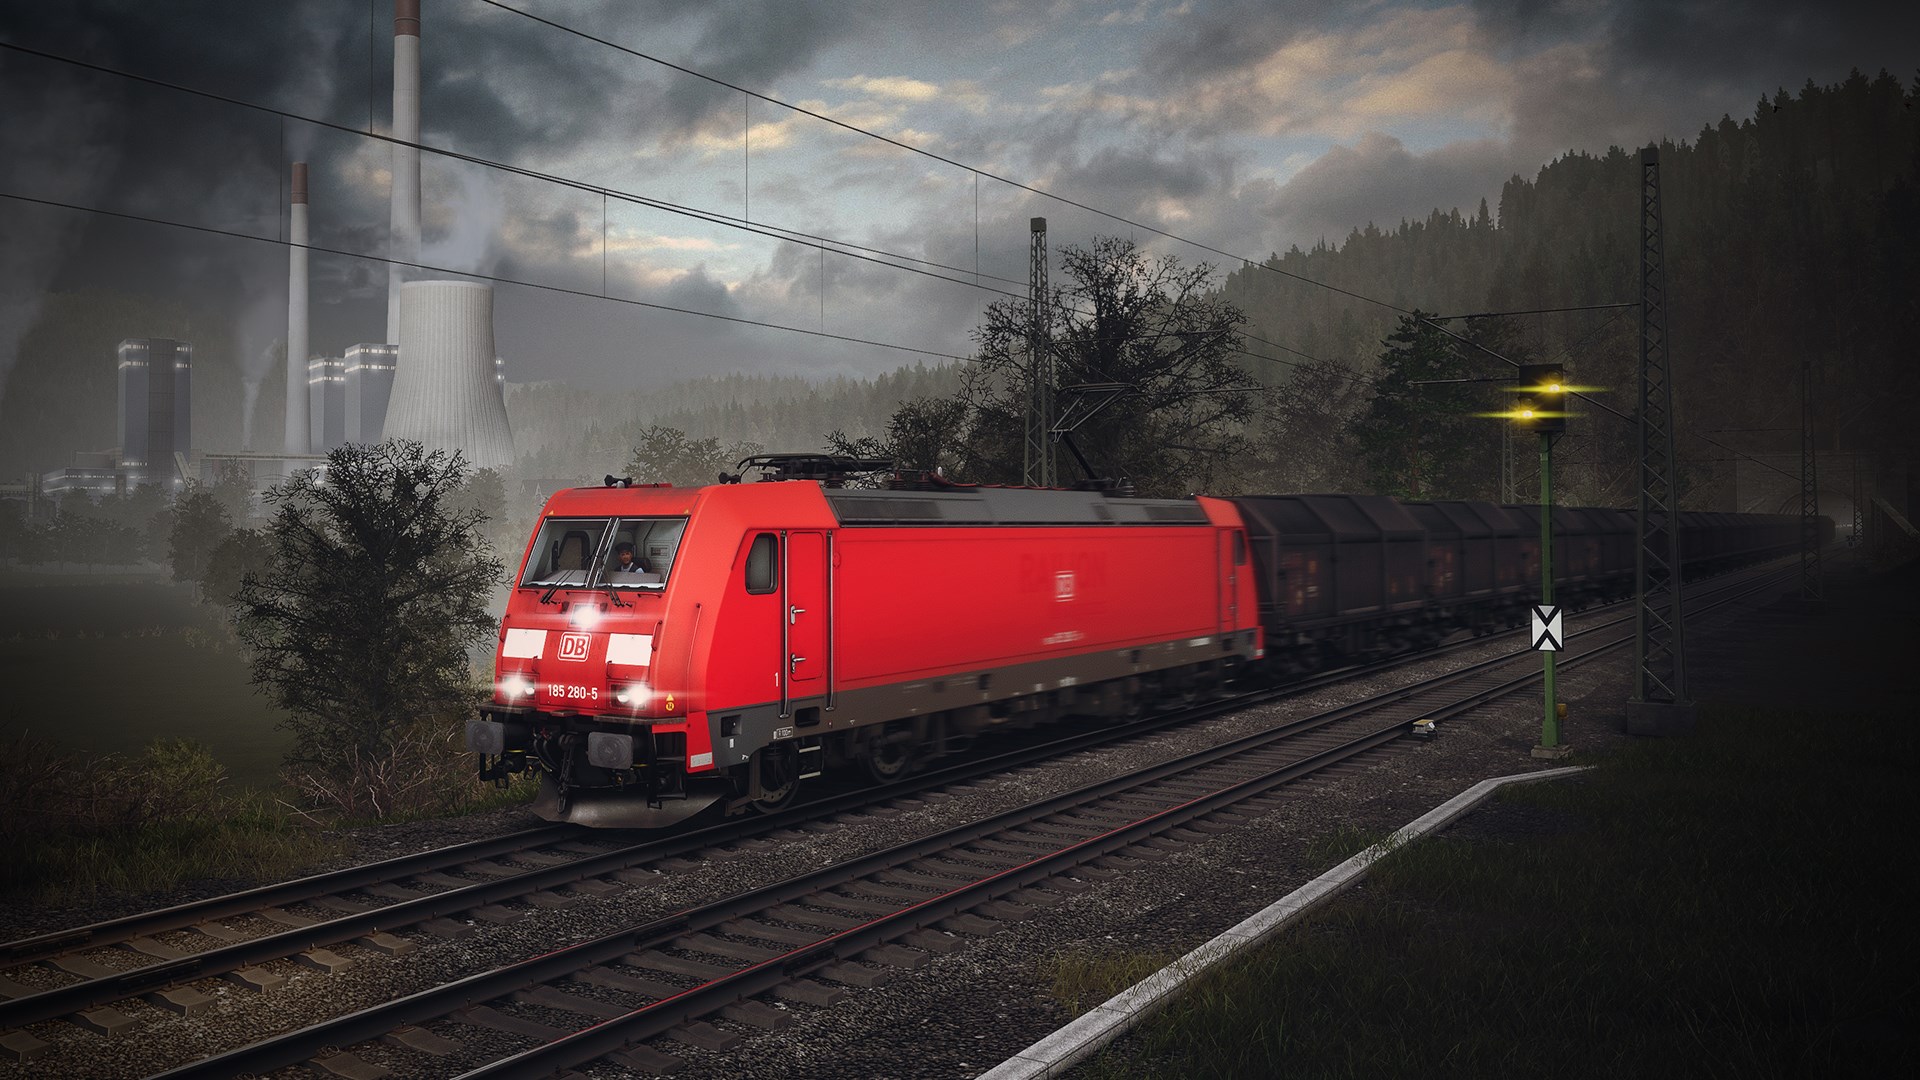 Train Sim World 2: Ruhr-Sieg Nord